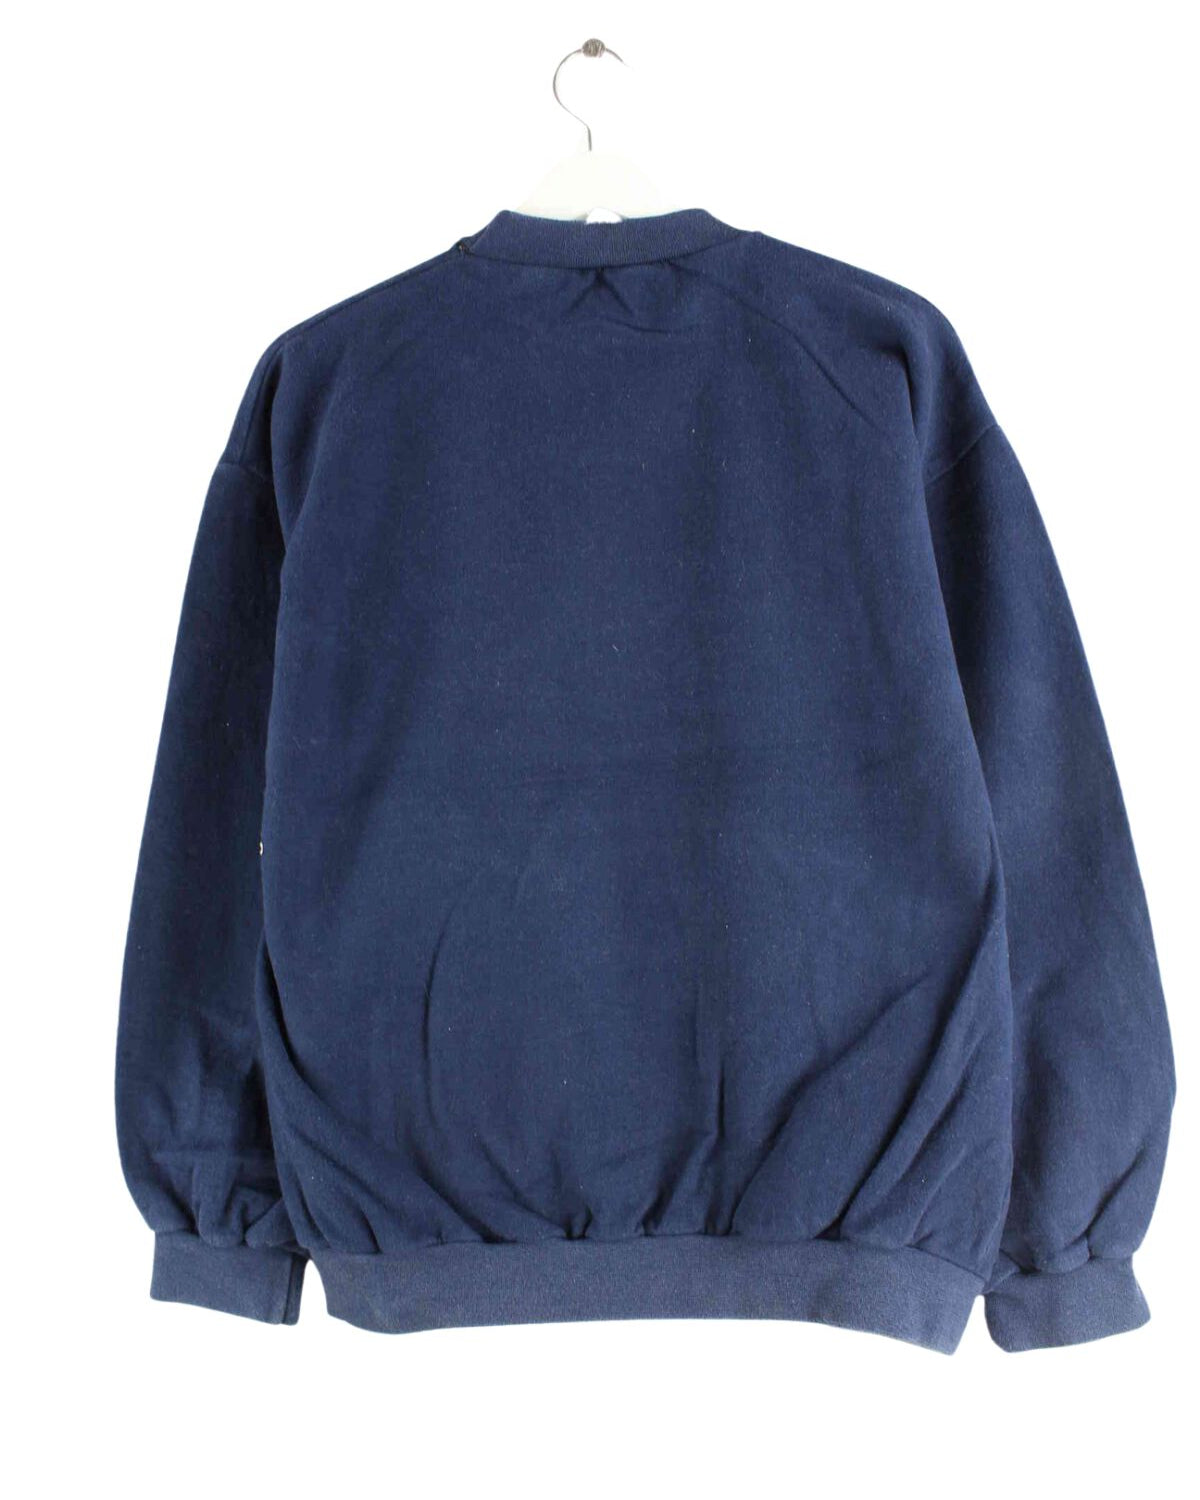 Nike 90s Vintage Swoosh Sweater Blau S (back image)